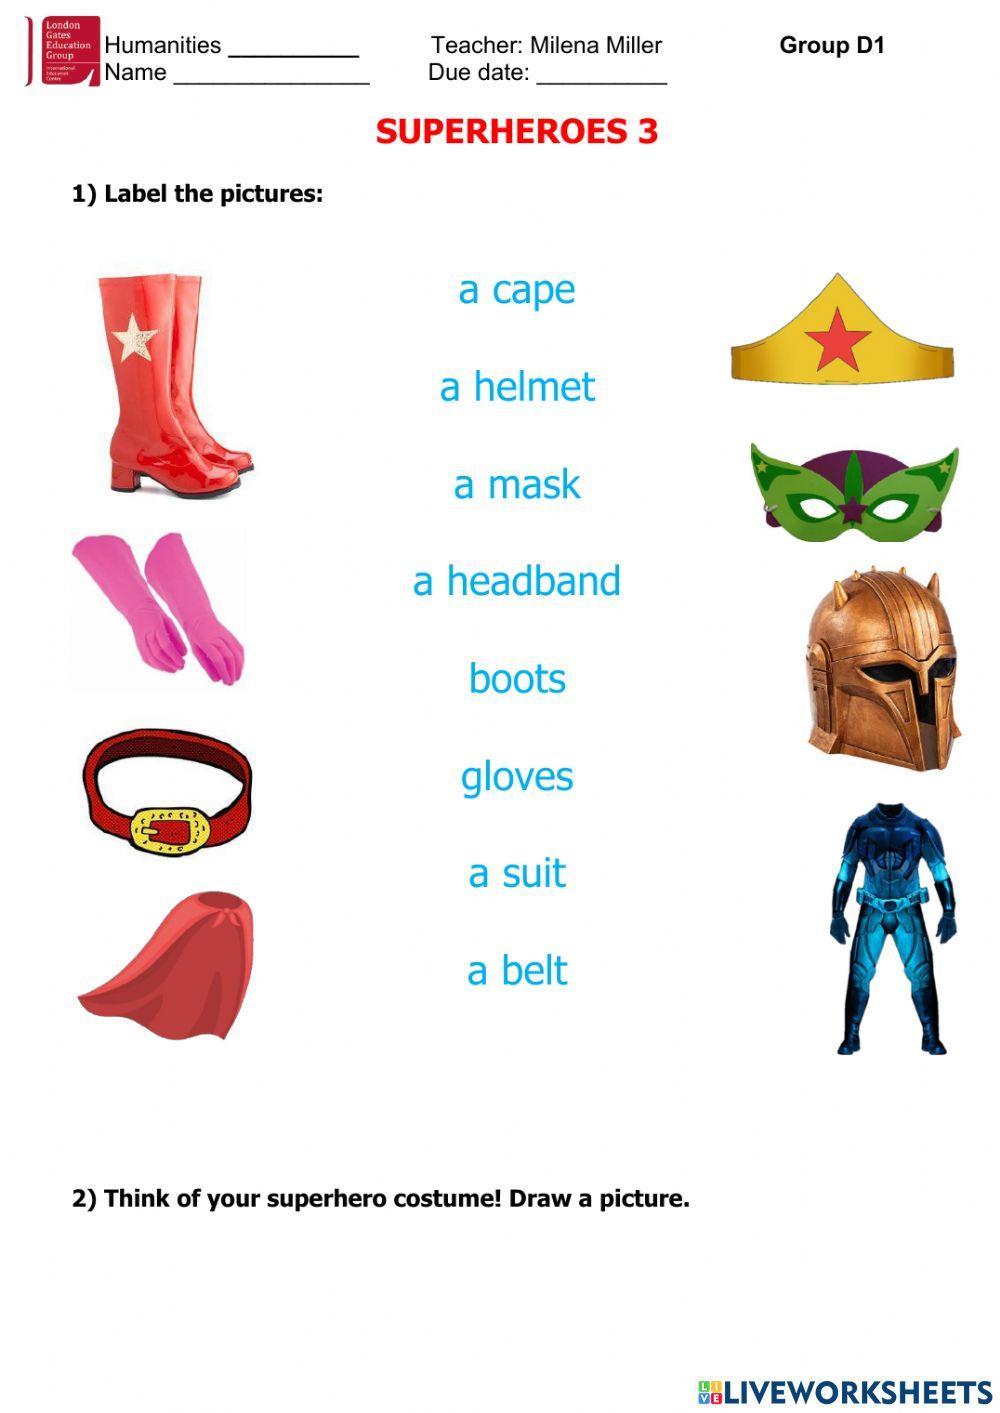 Superhero costume